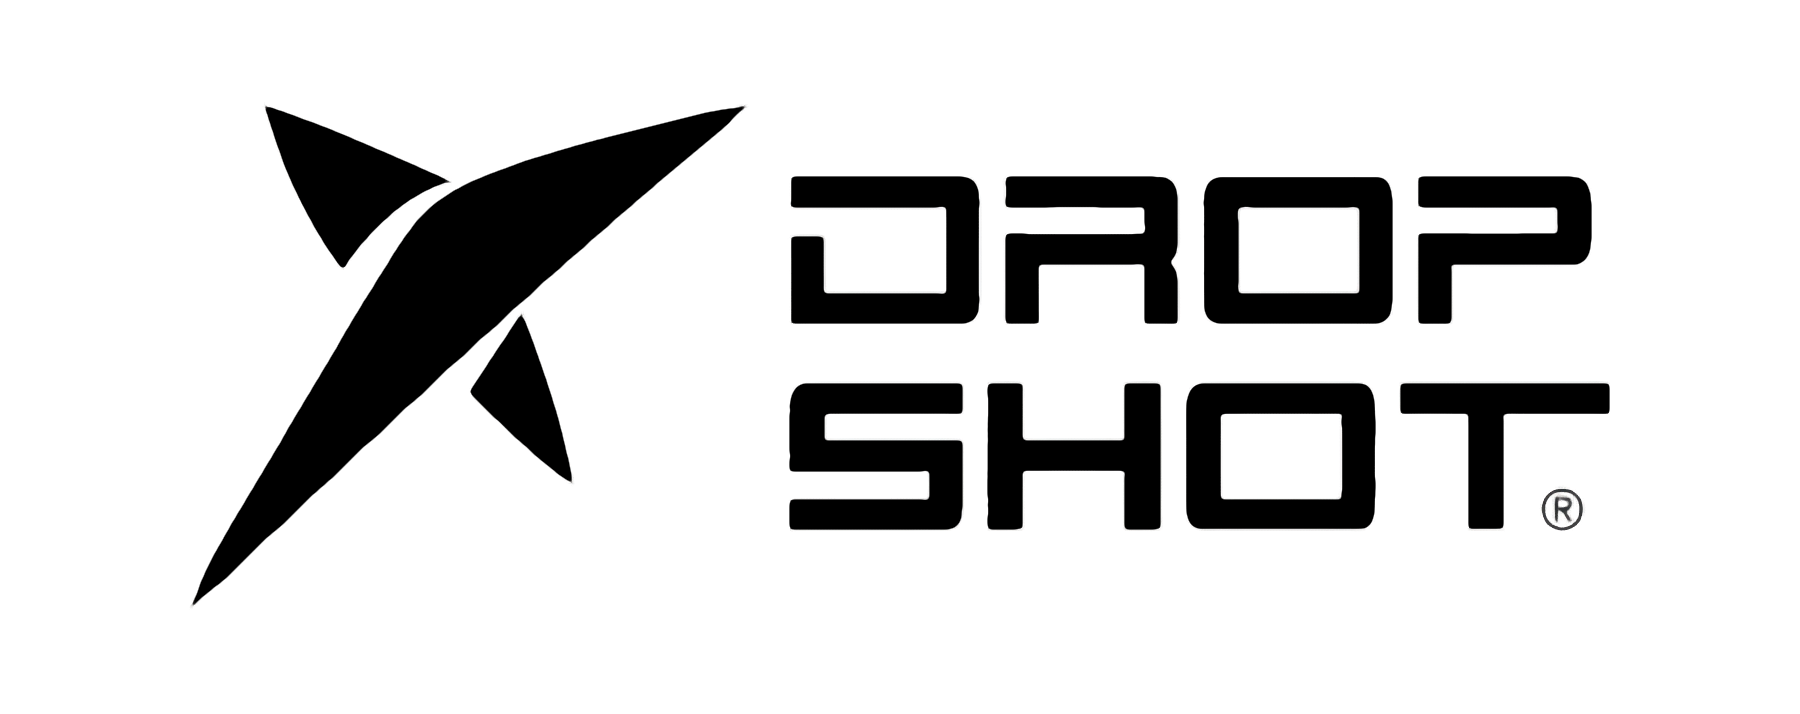 dropshot logo black